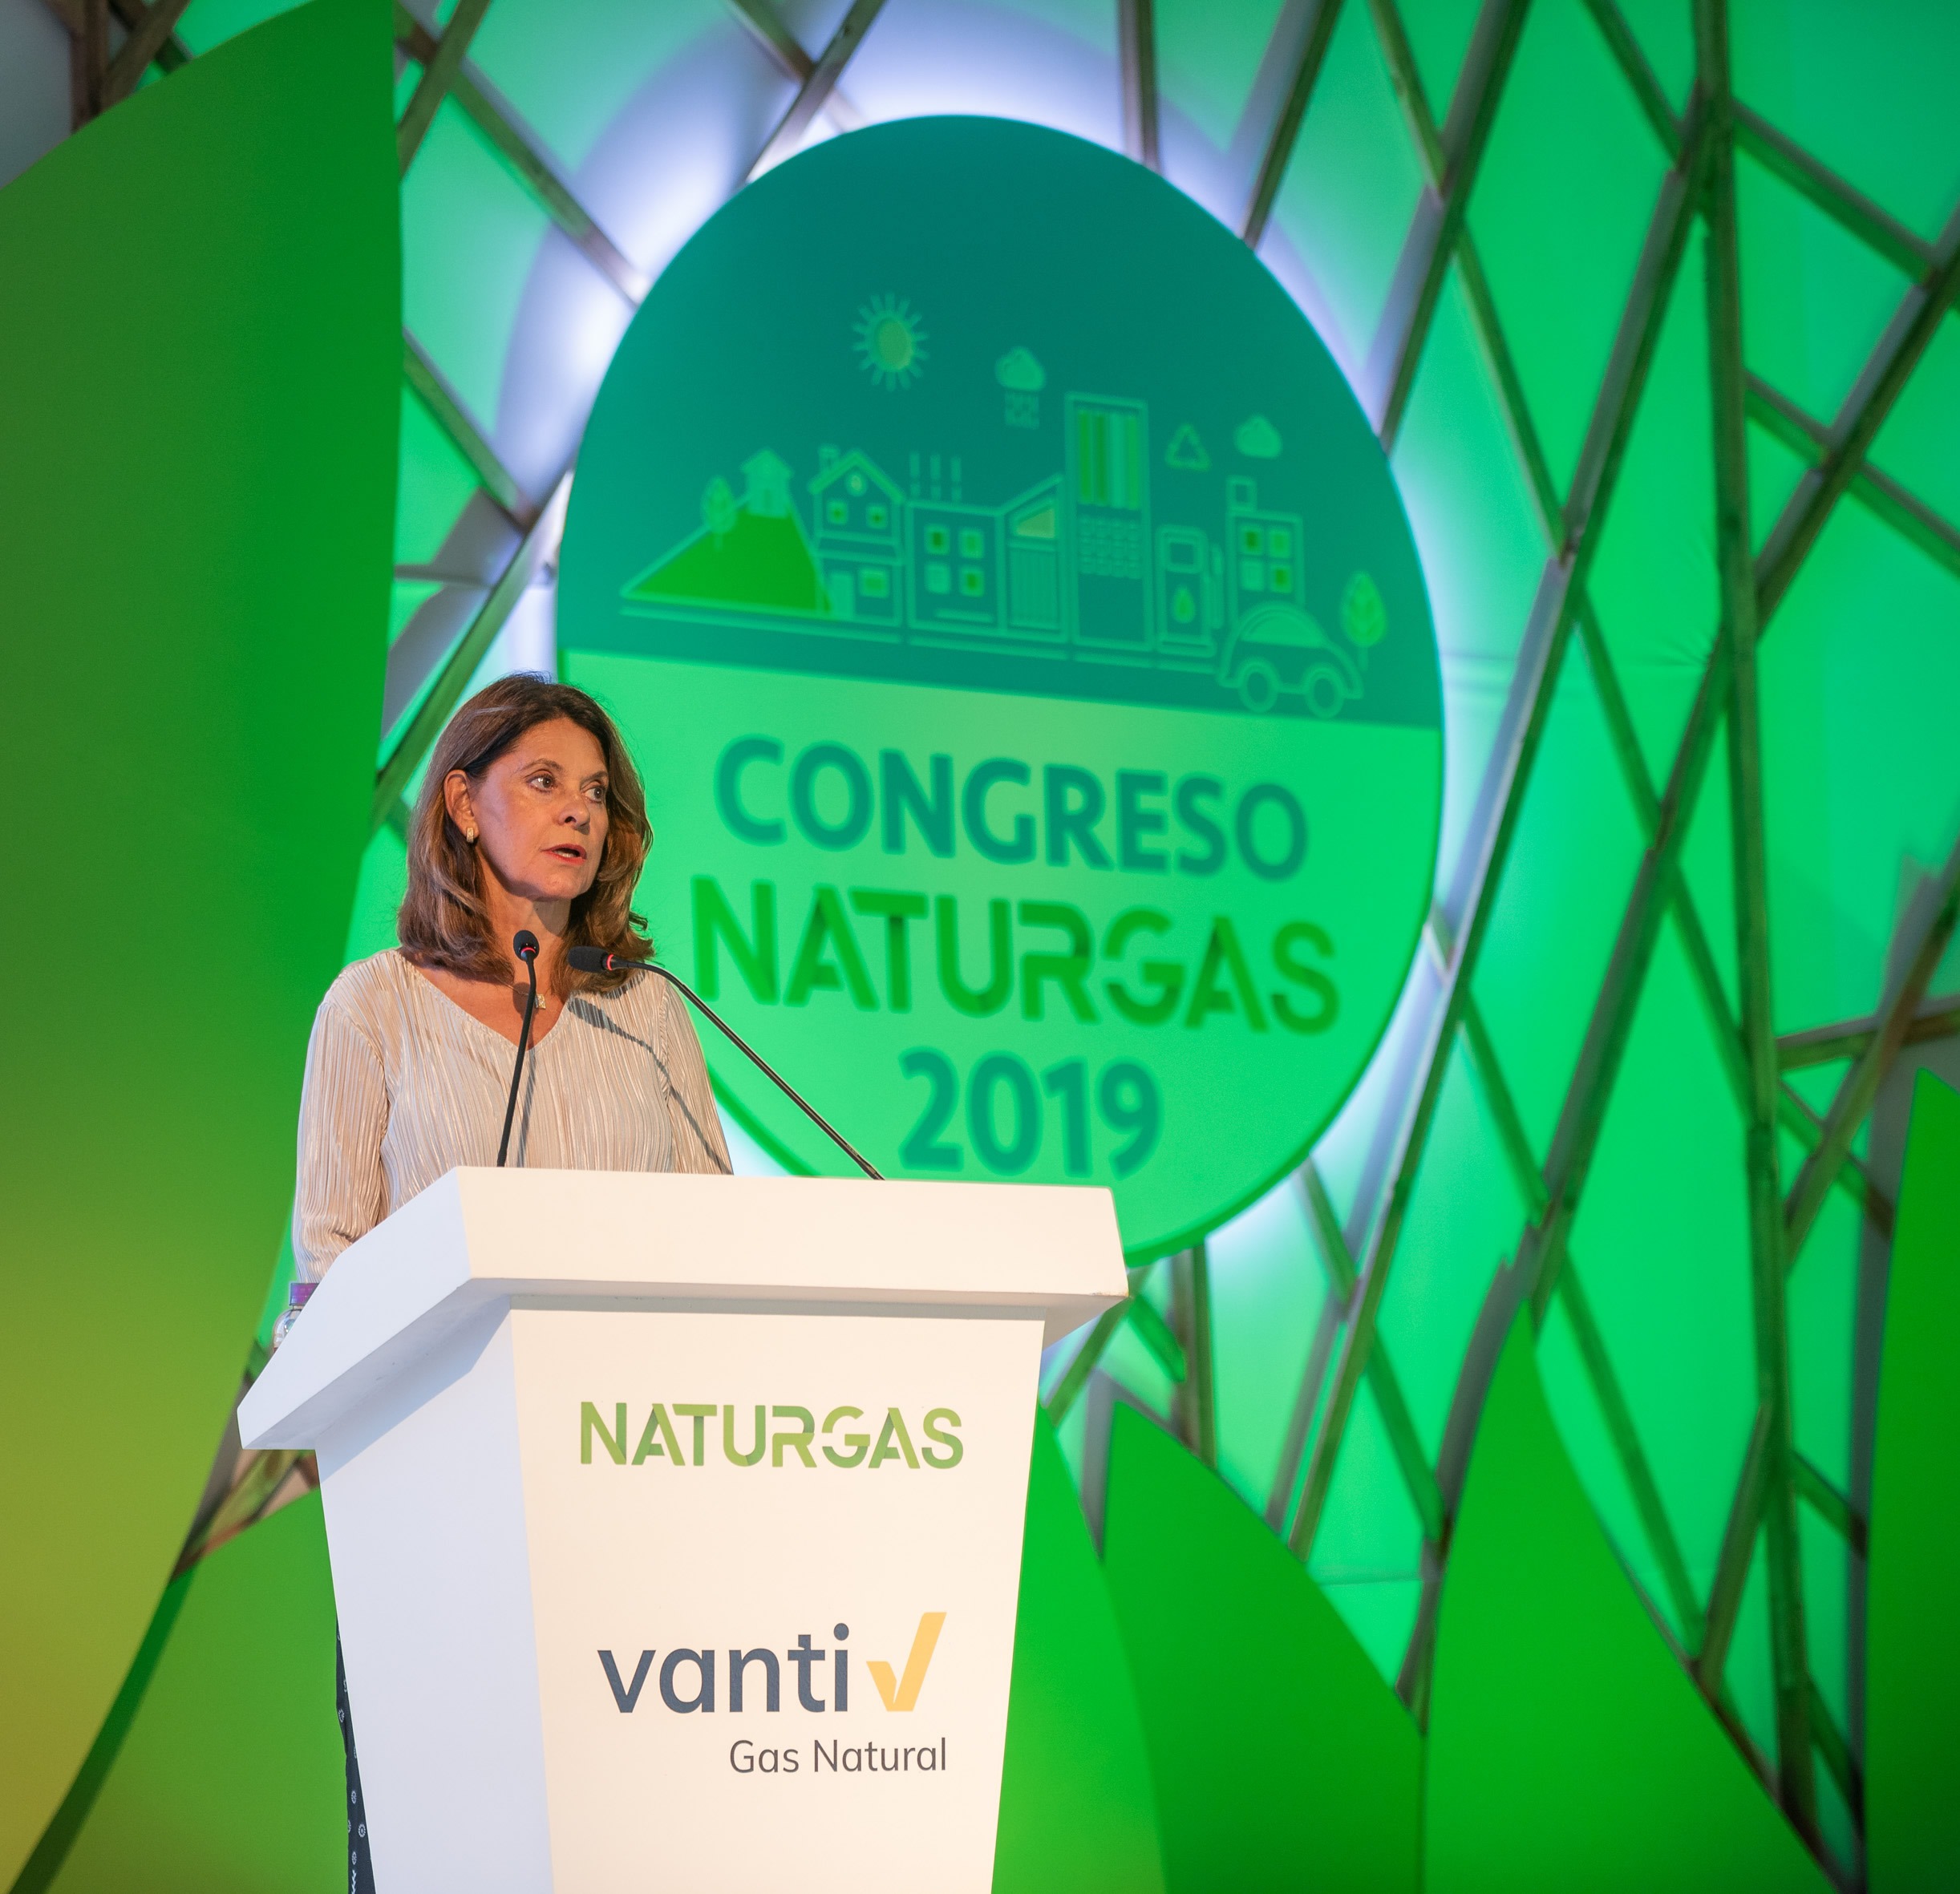 congreso naturgas 2019